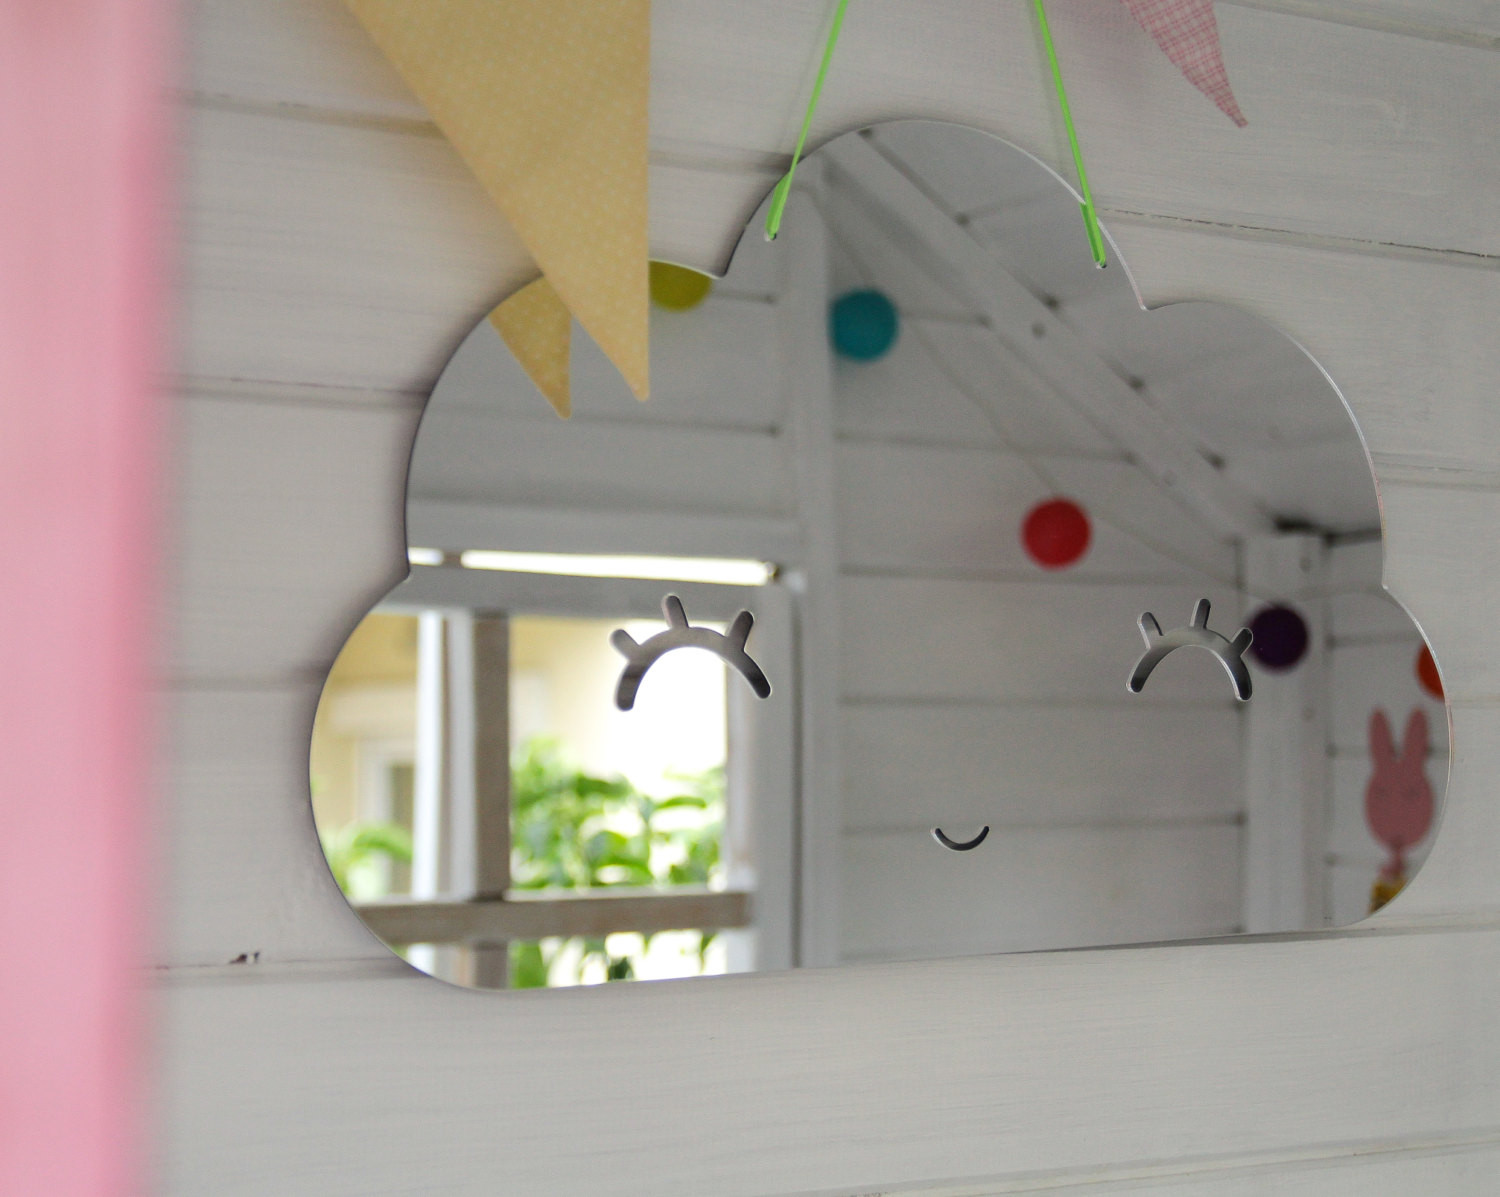 Mirrors For Kids Room
 Cloud shape acrylic mirror for kids room nursery room safe